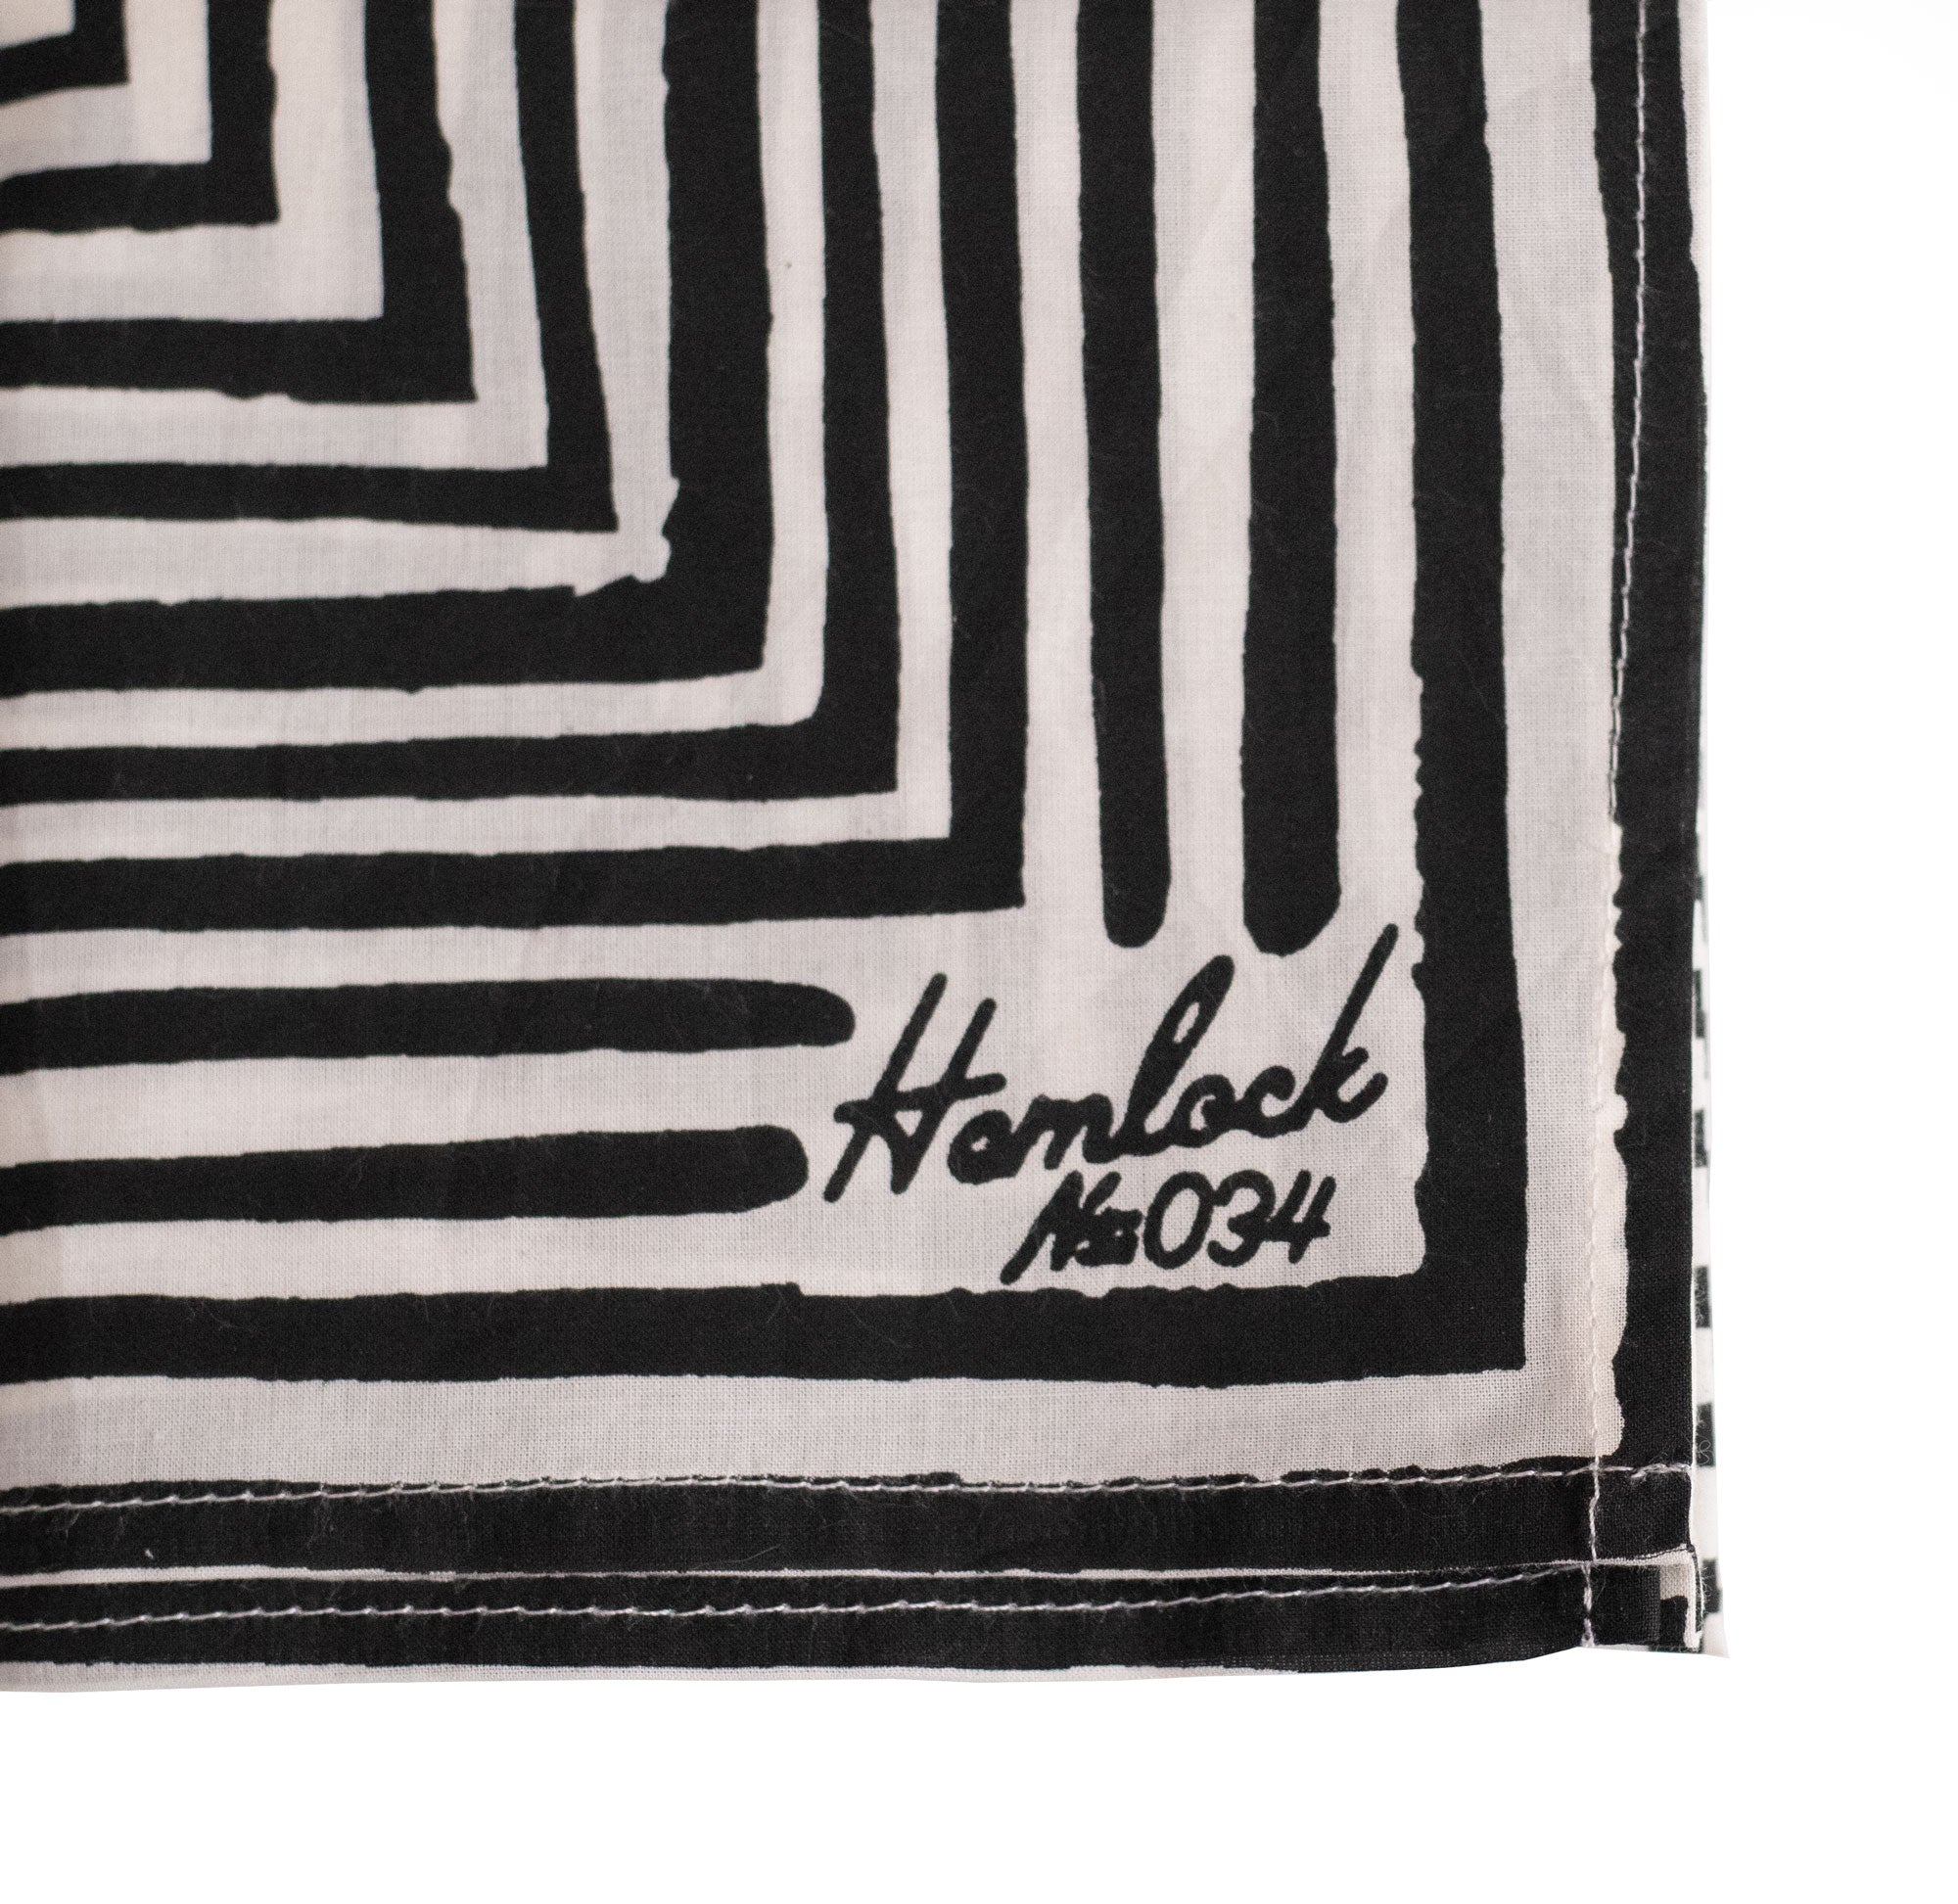 Hemlock Goods Bandana No. 034 Sammie "B"- Black Printing